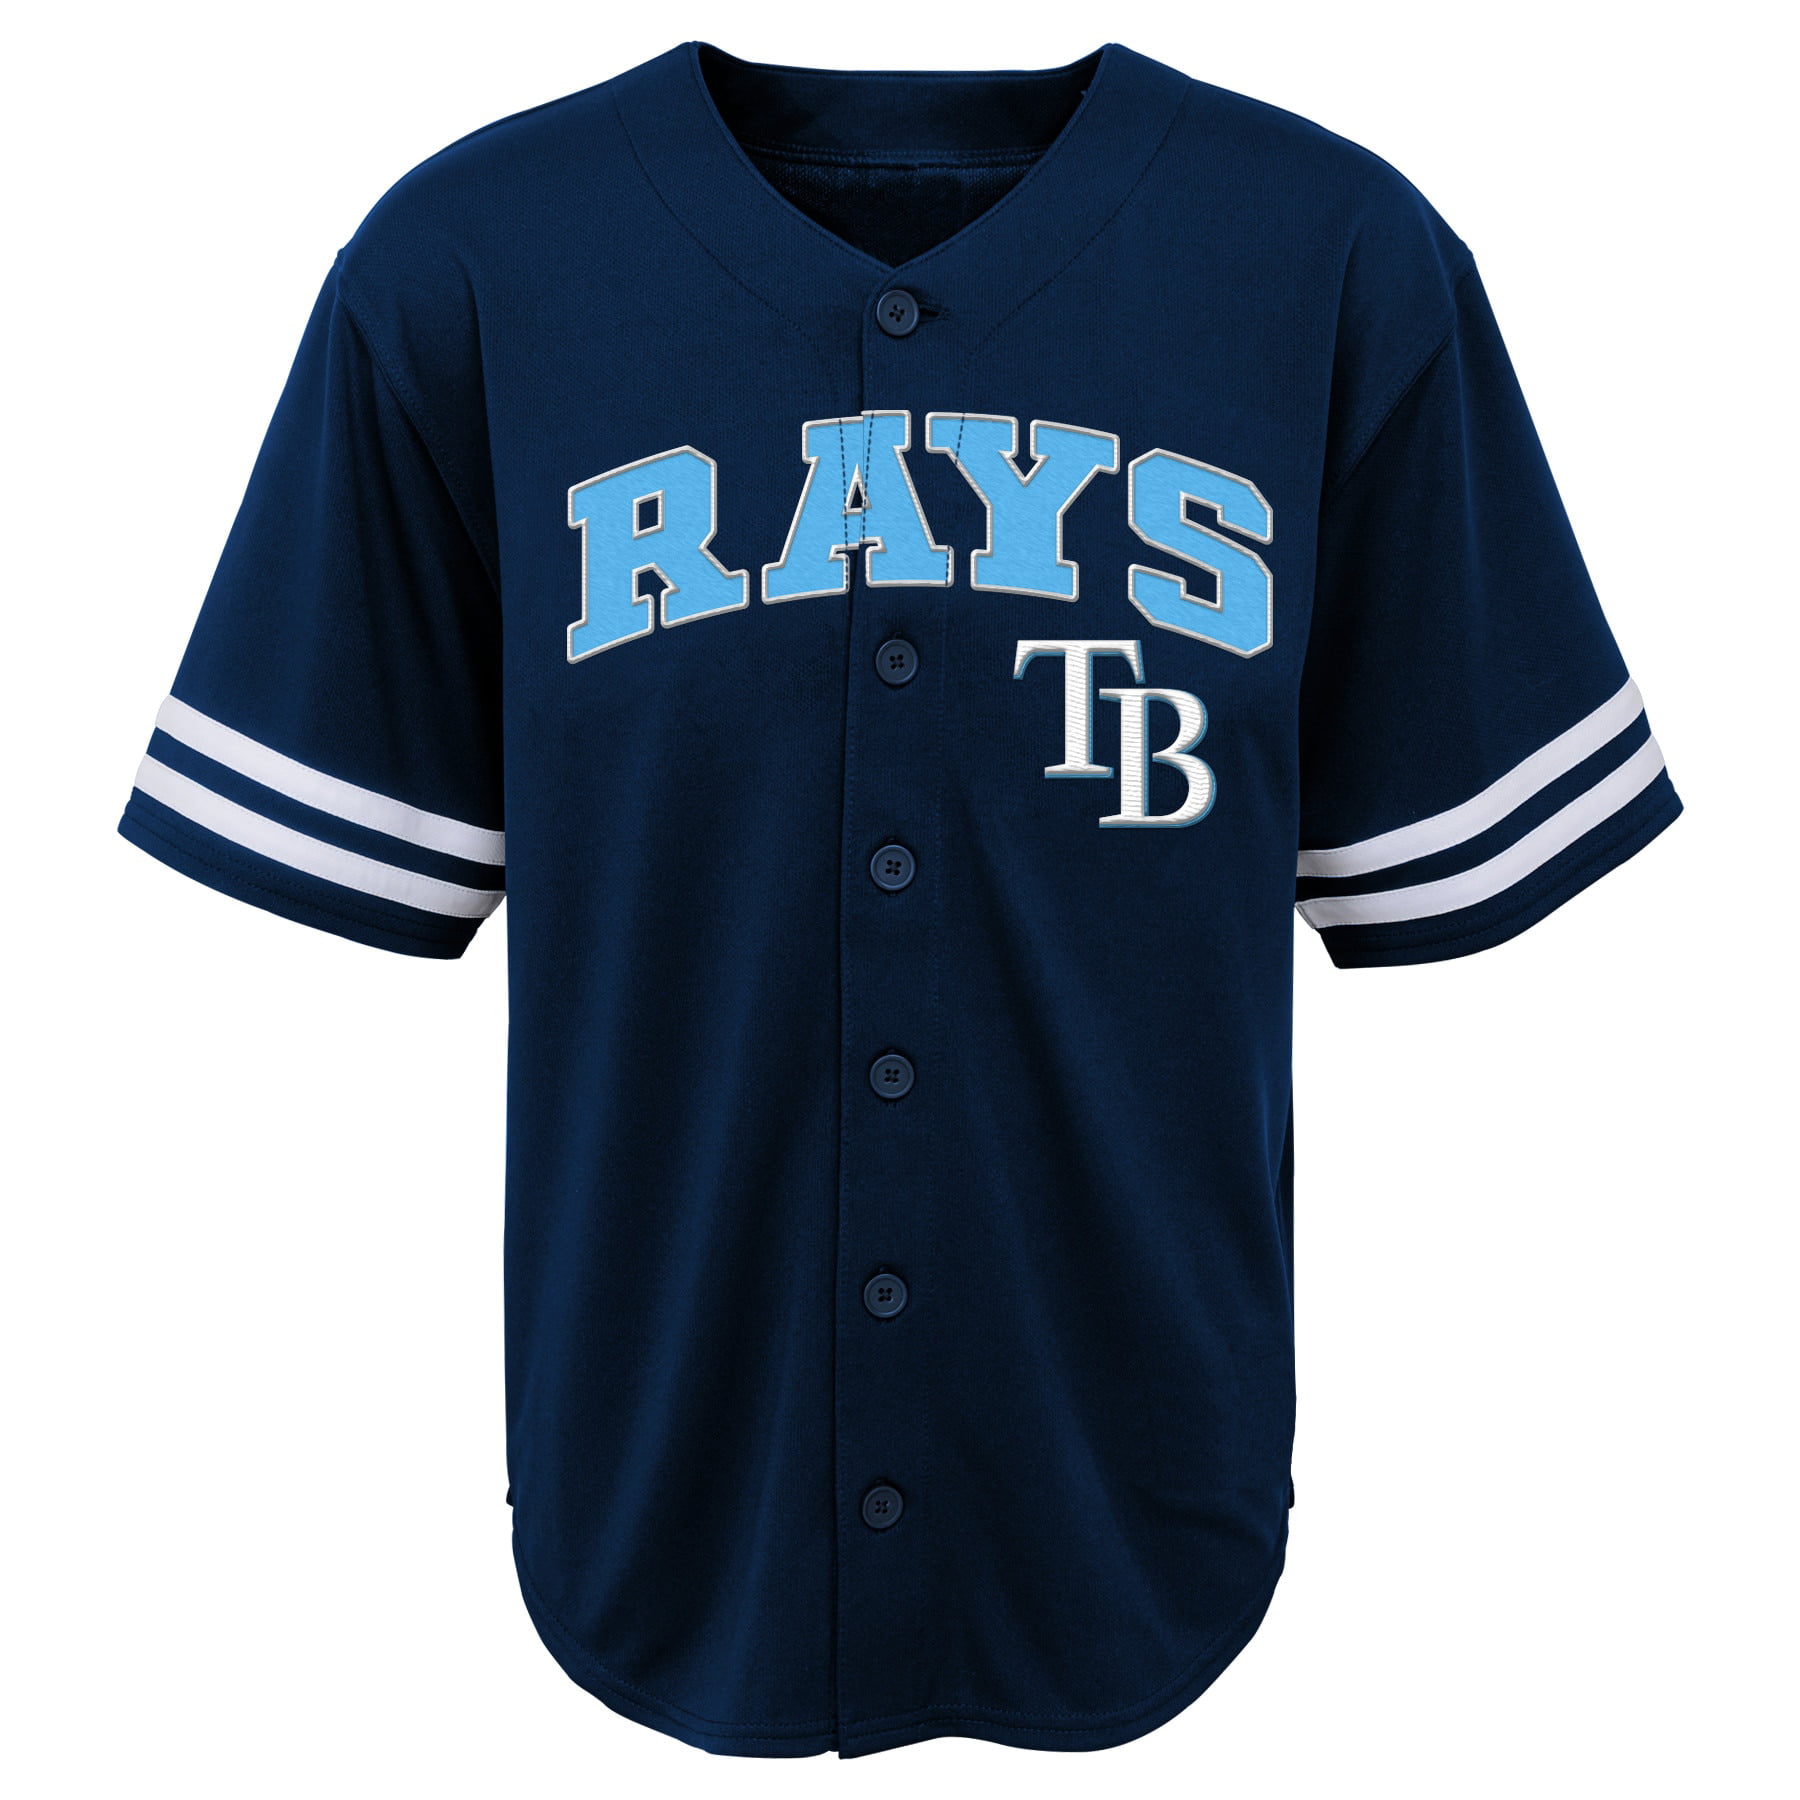 Rays Baseball Youth T-shirt 